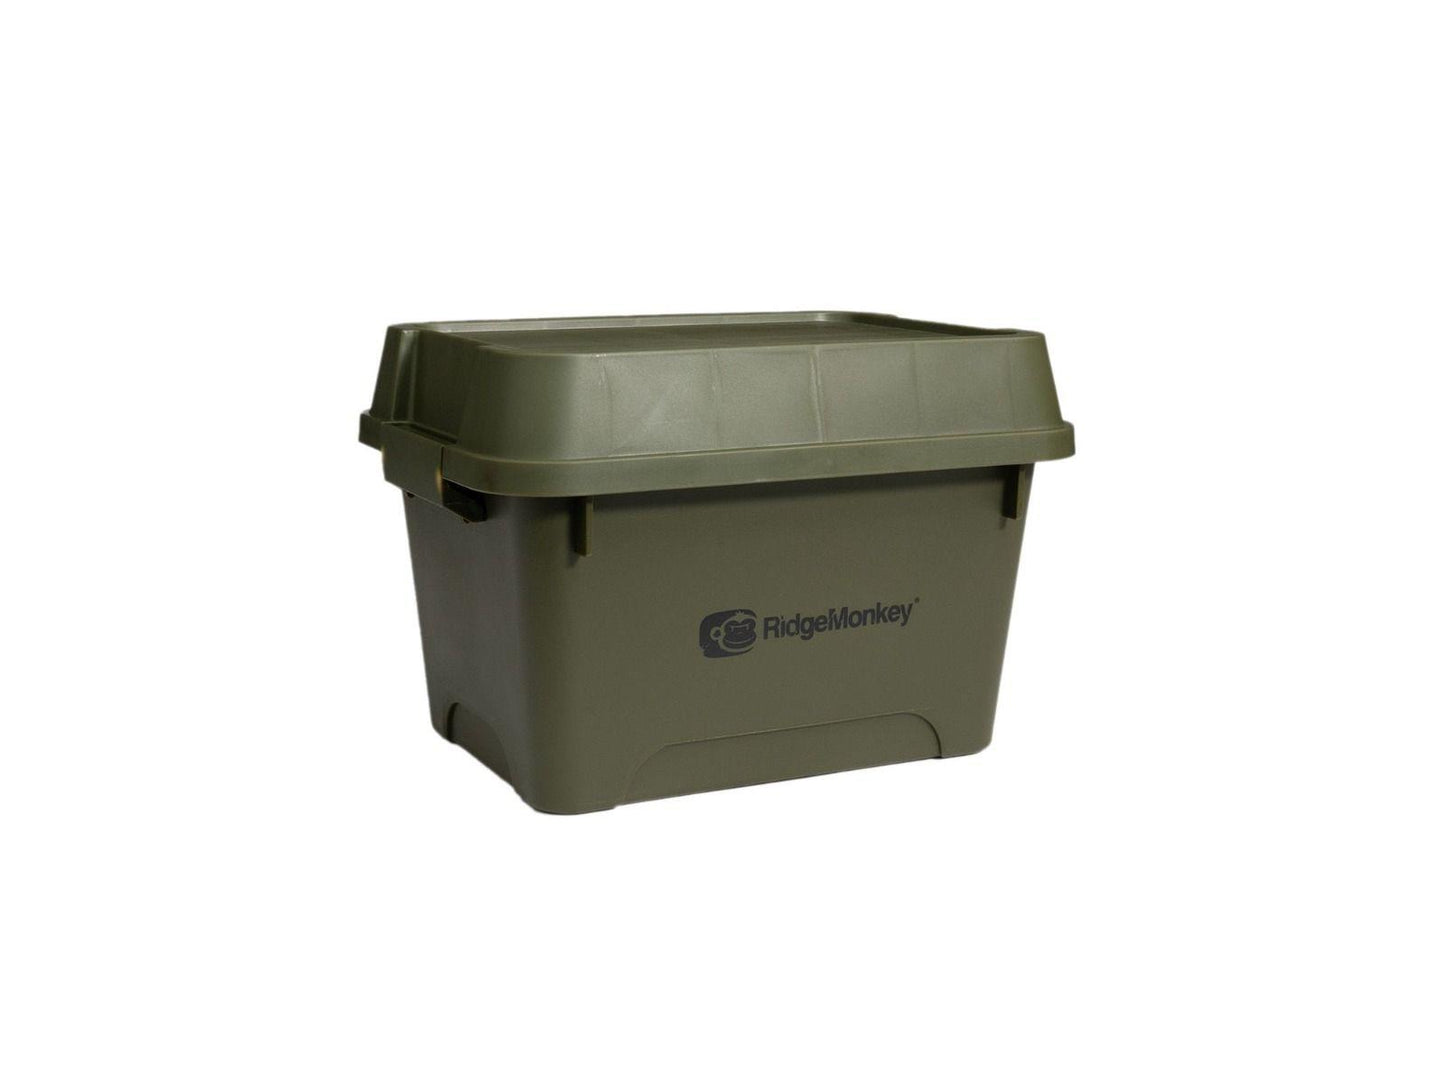 RidgeMonkey Armoury Stackable Storage Box